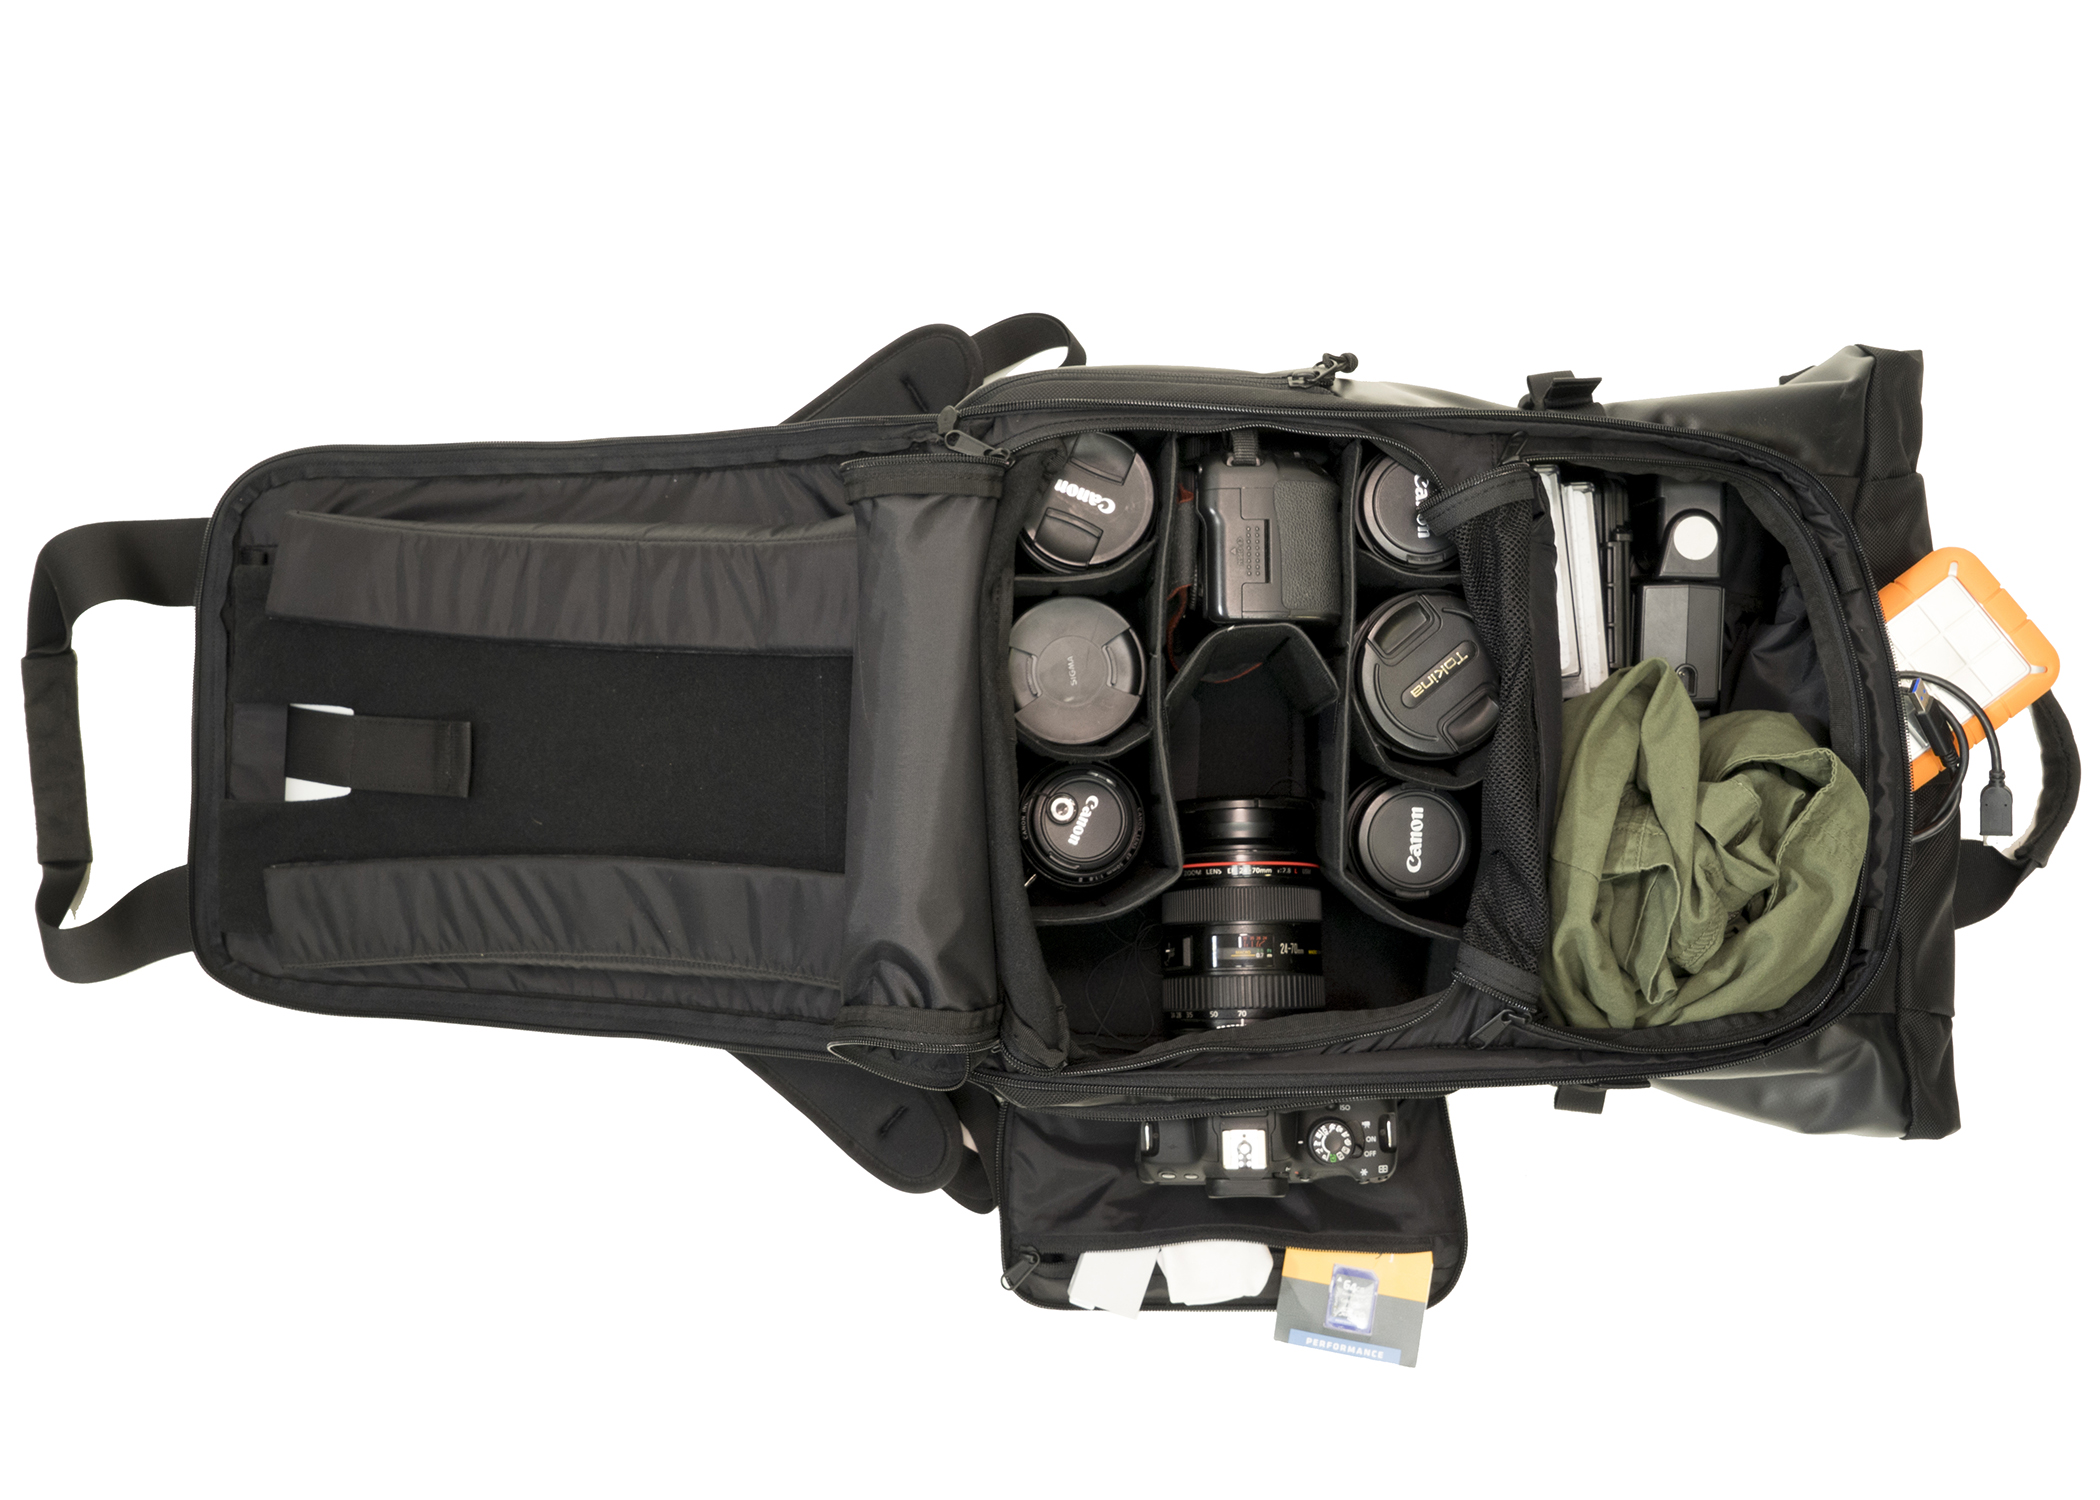 WANDRD's PRVKE Backpack Camera Gear